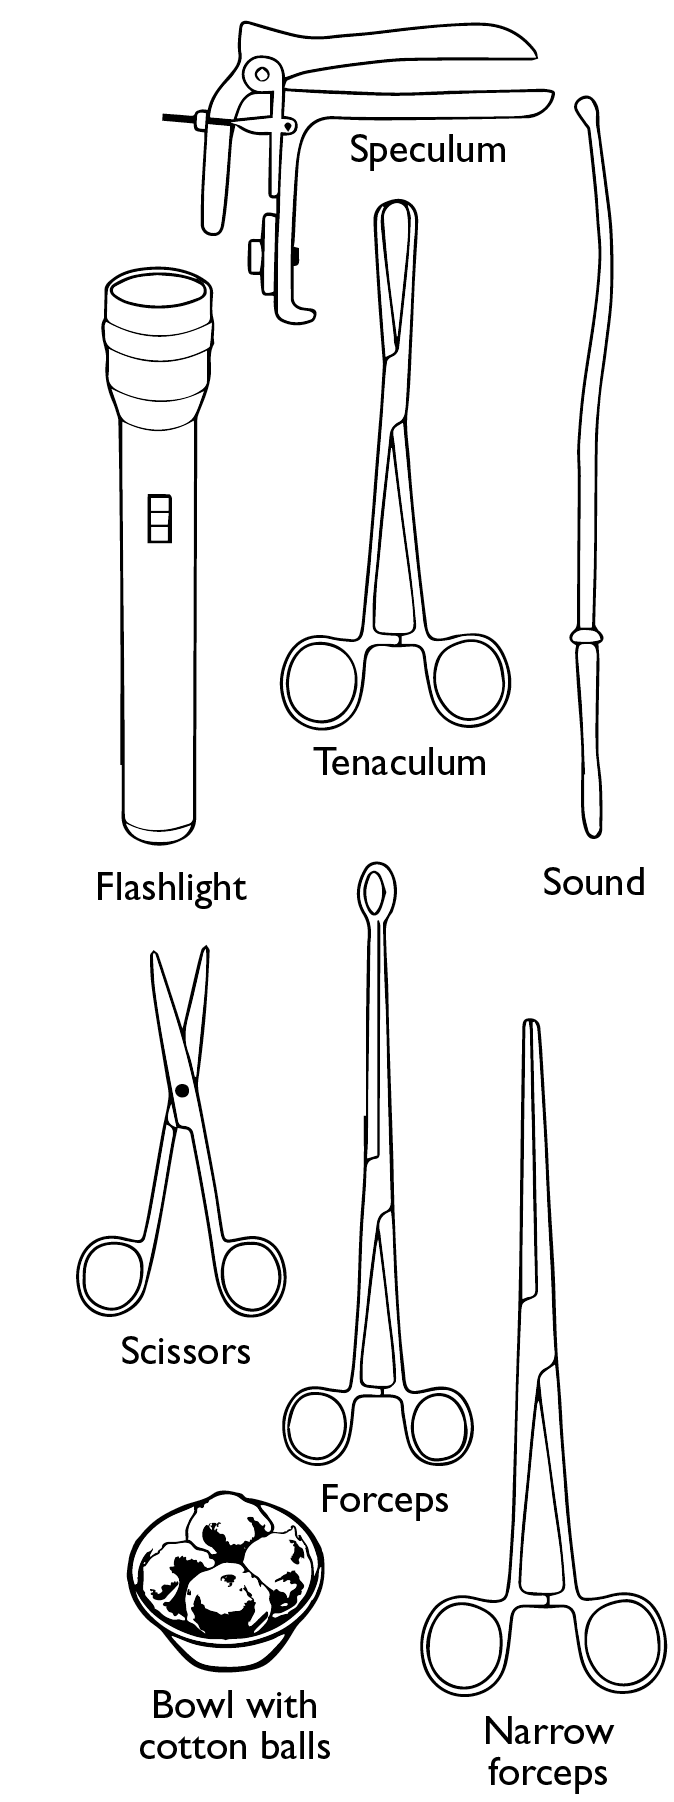 IUD instruments